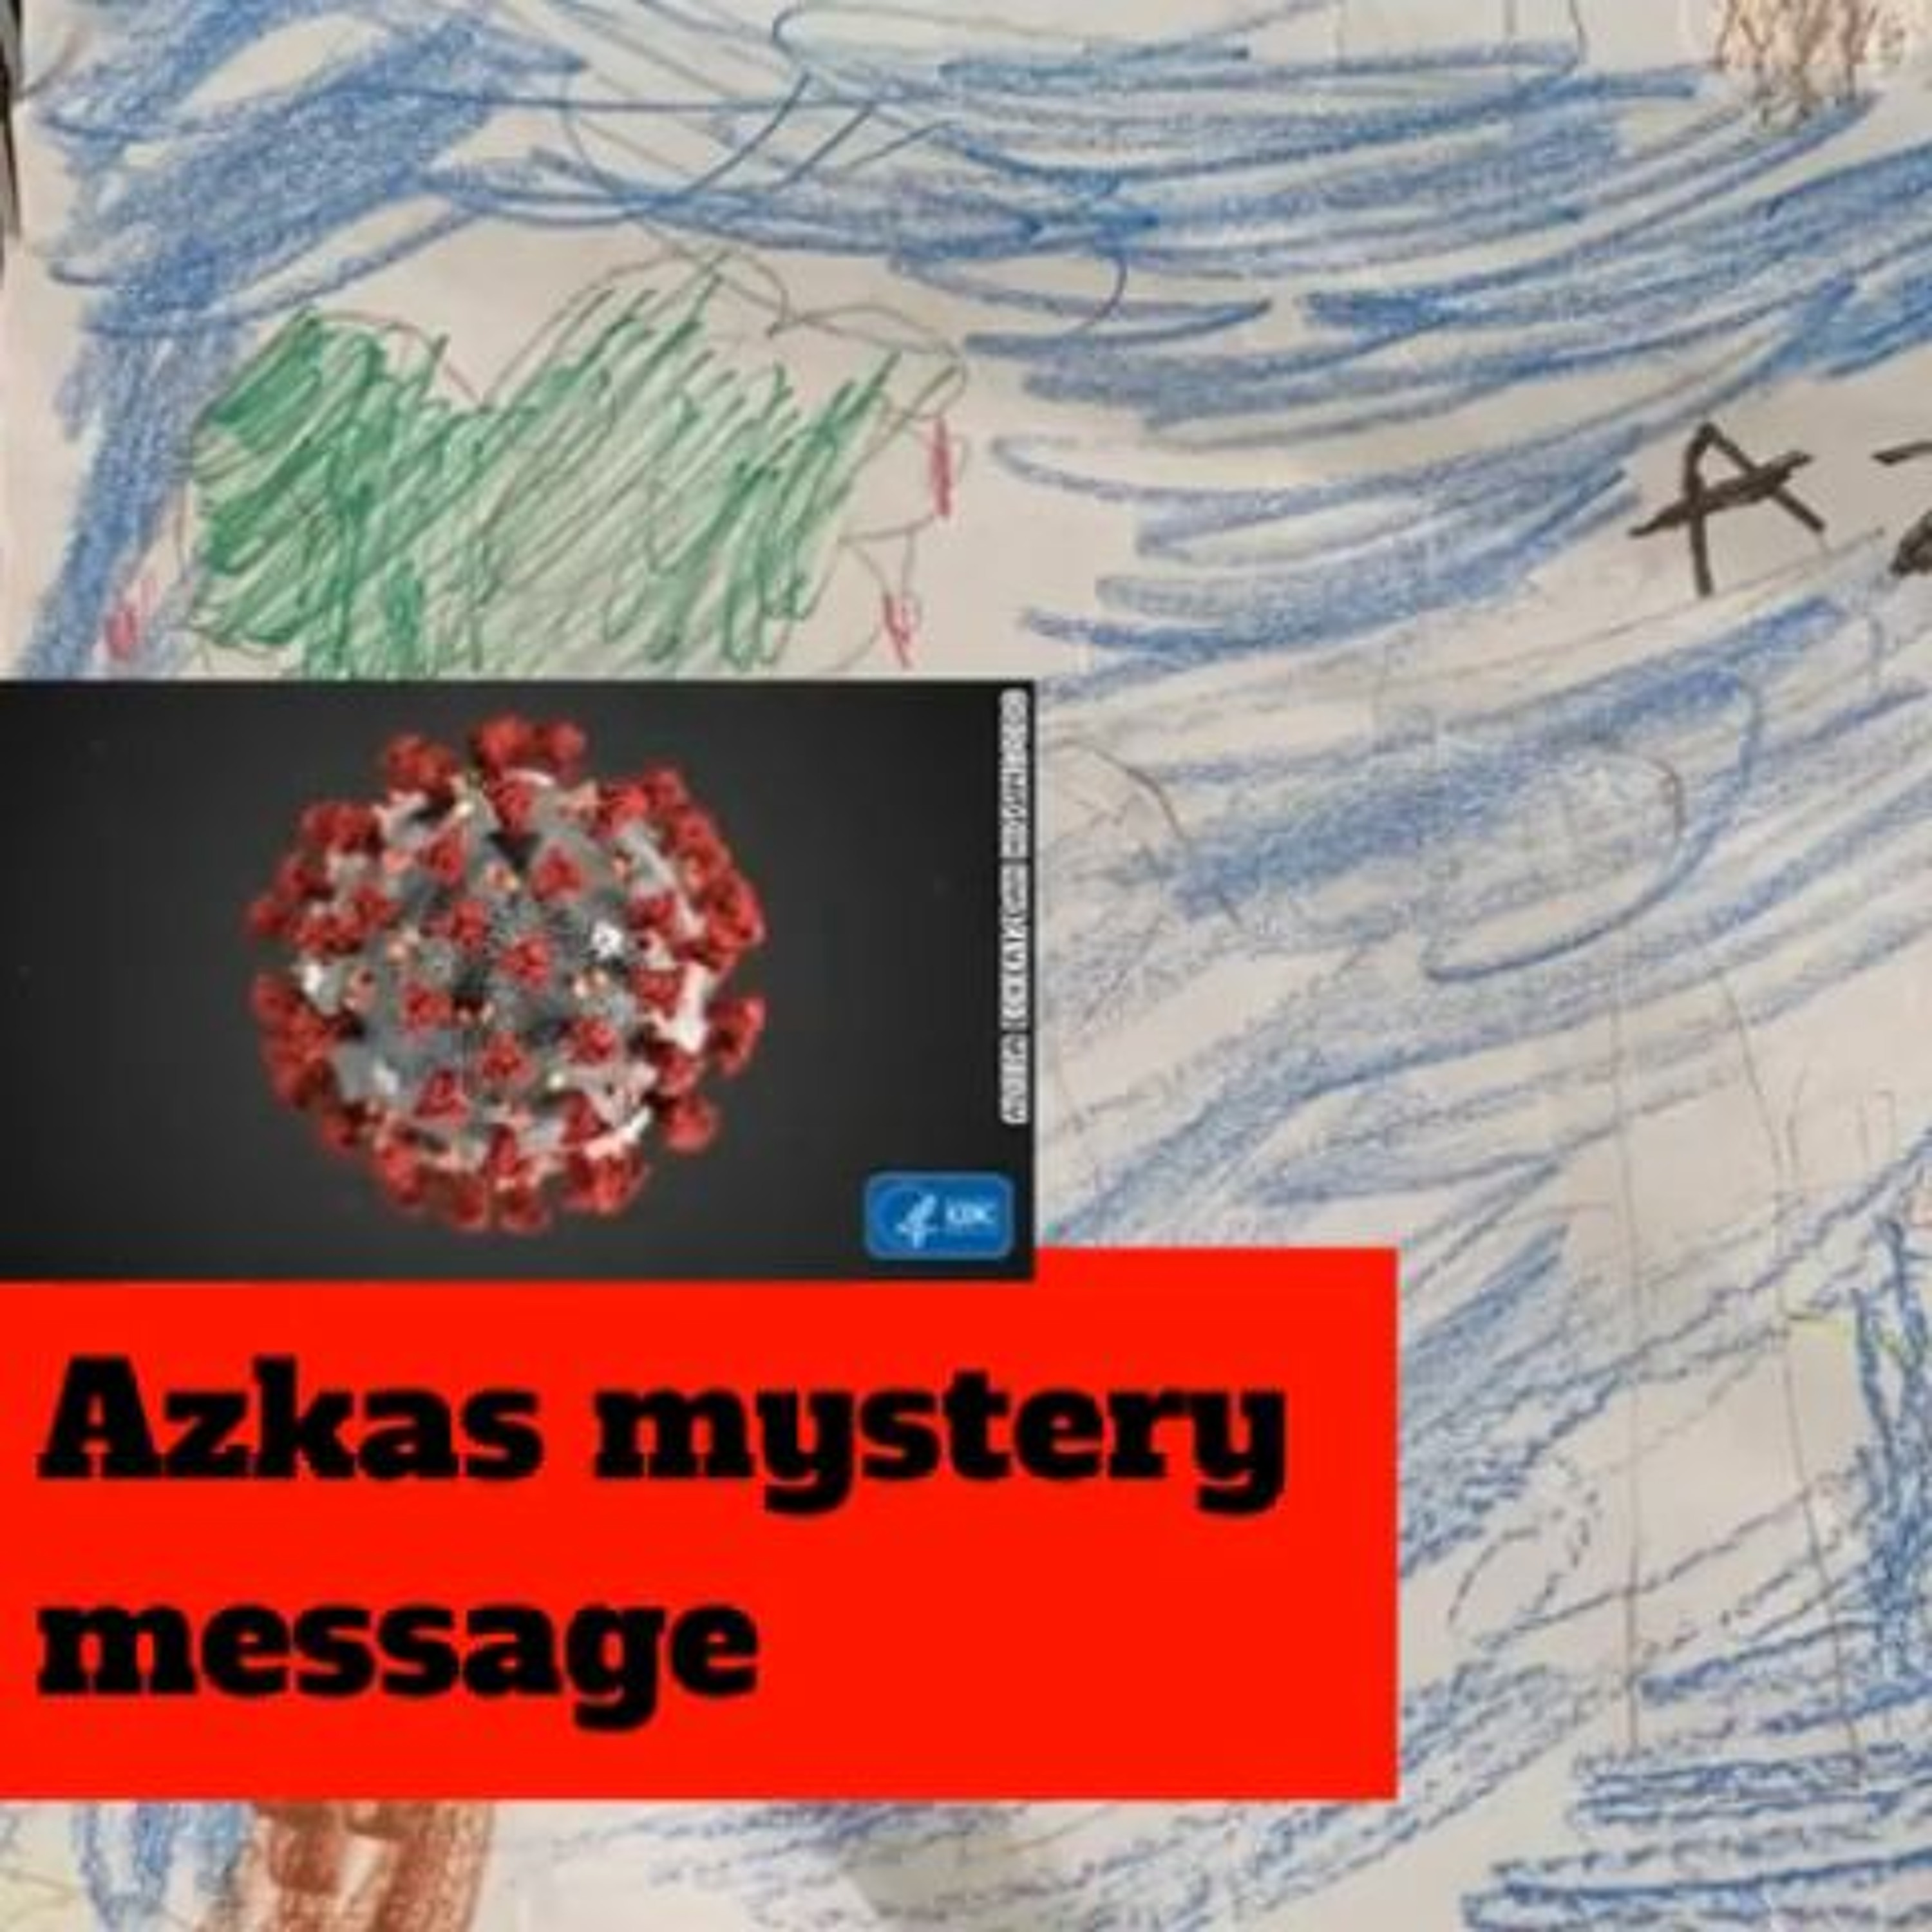 "Azka's Mystery Podcst" Podcast